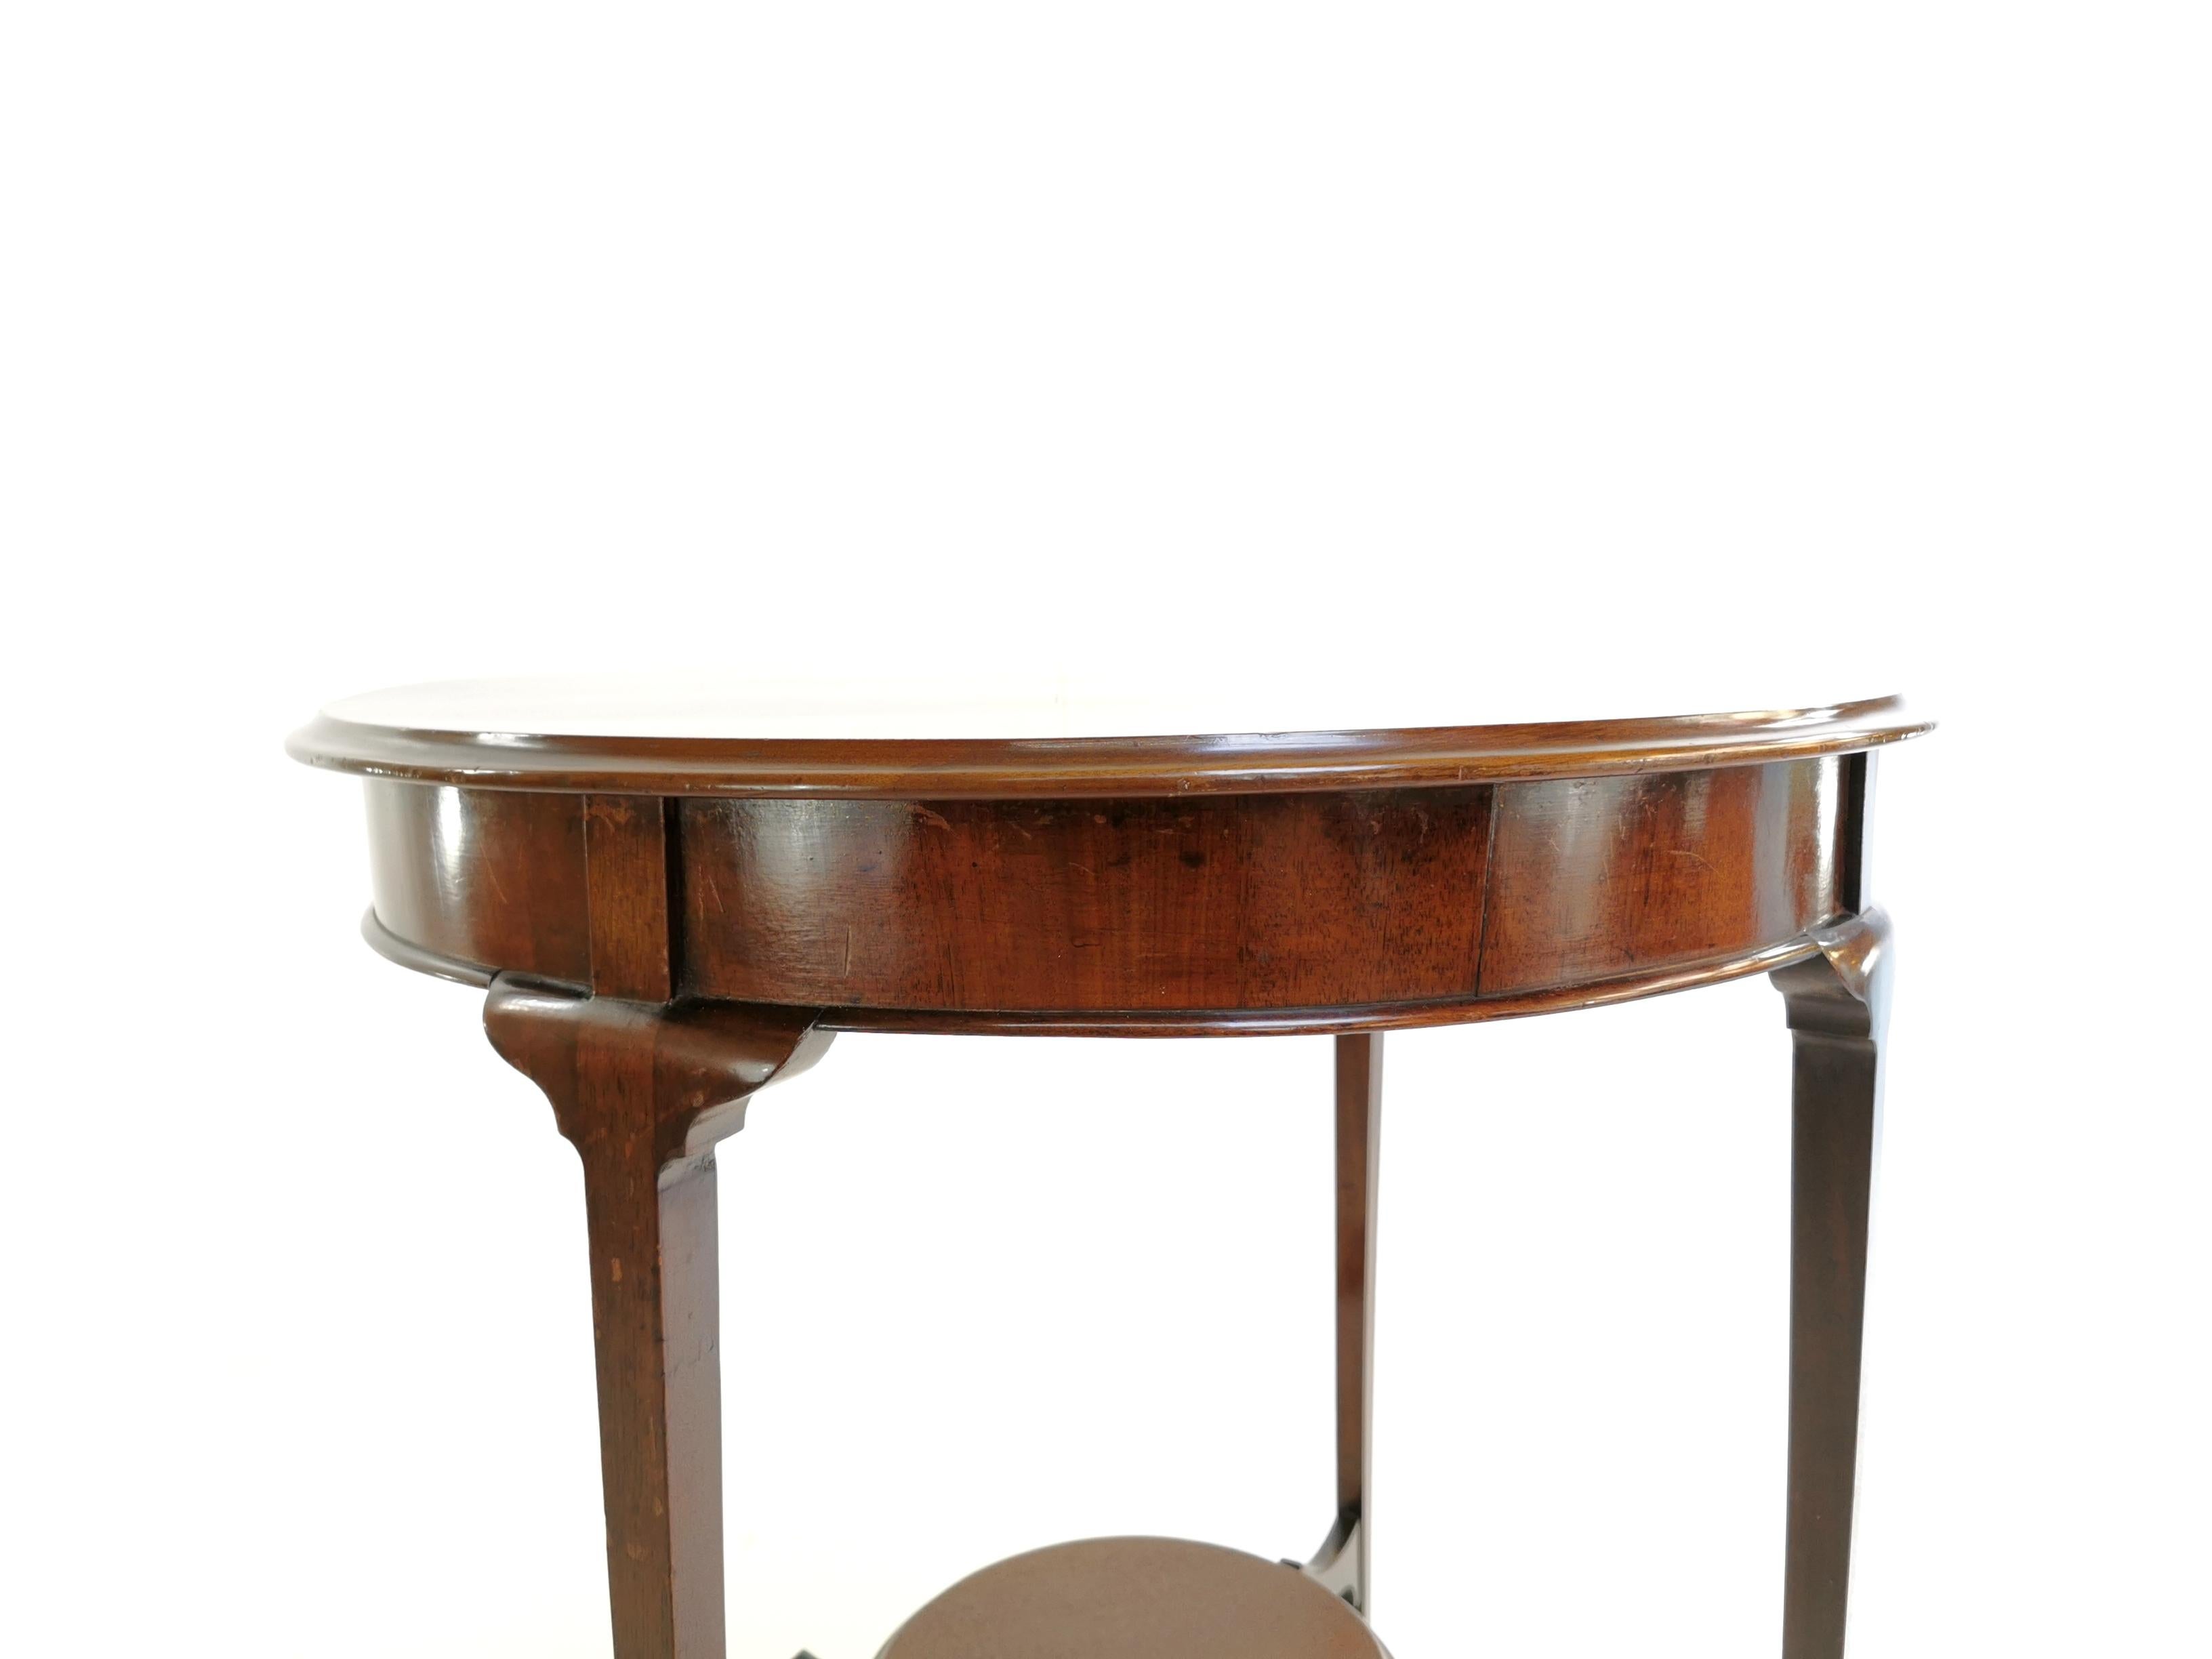 20th Century English Antique Edwardian Mahogany Circular Side Occasional Table